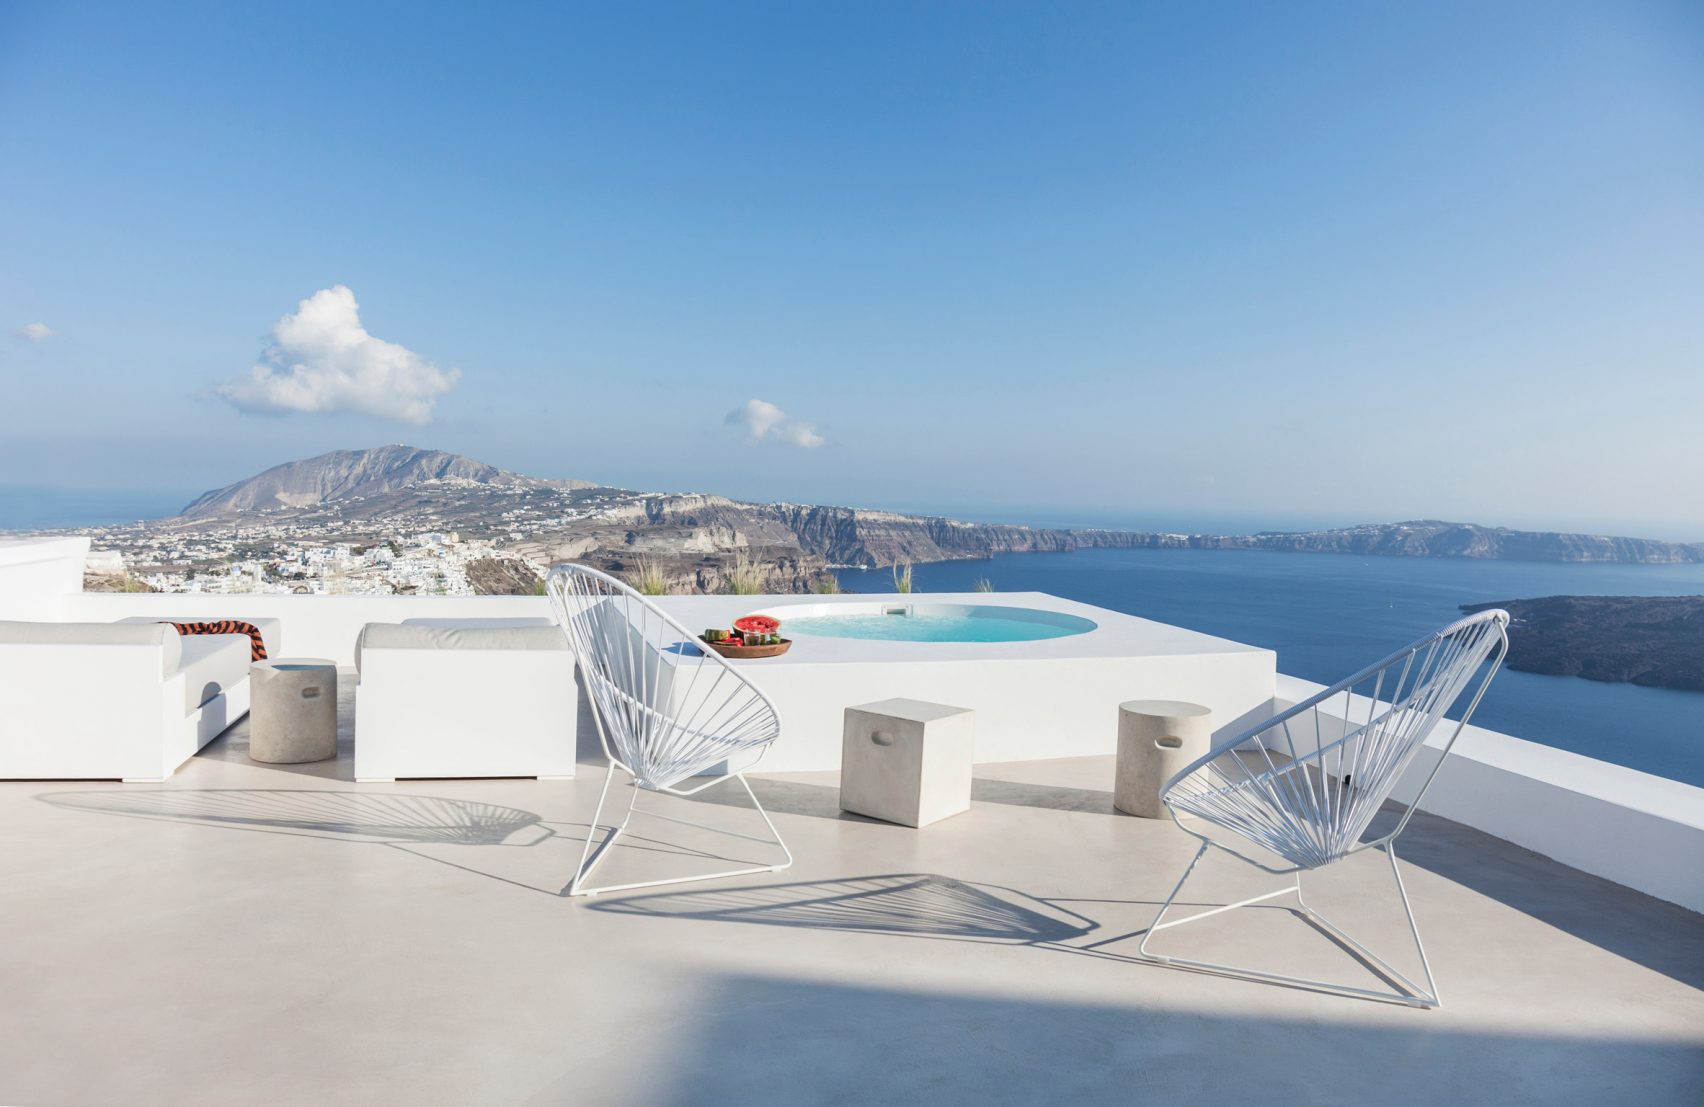 summer-residence-santorini-kapsimalis-architects-greece-architecture_dezeen_2364_col_9-1704x1107